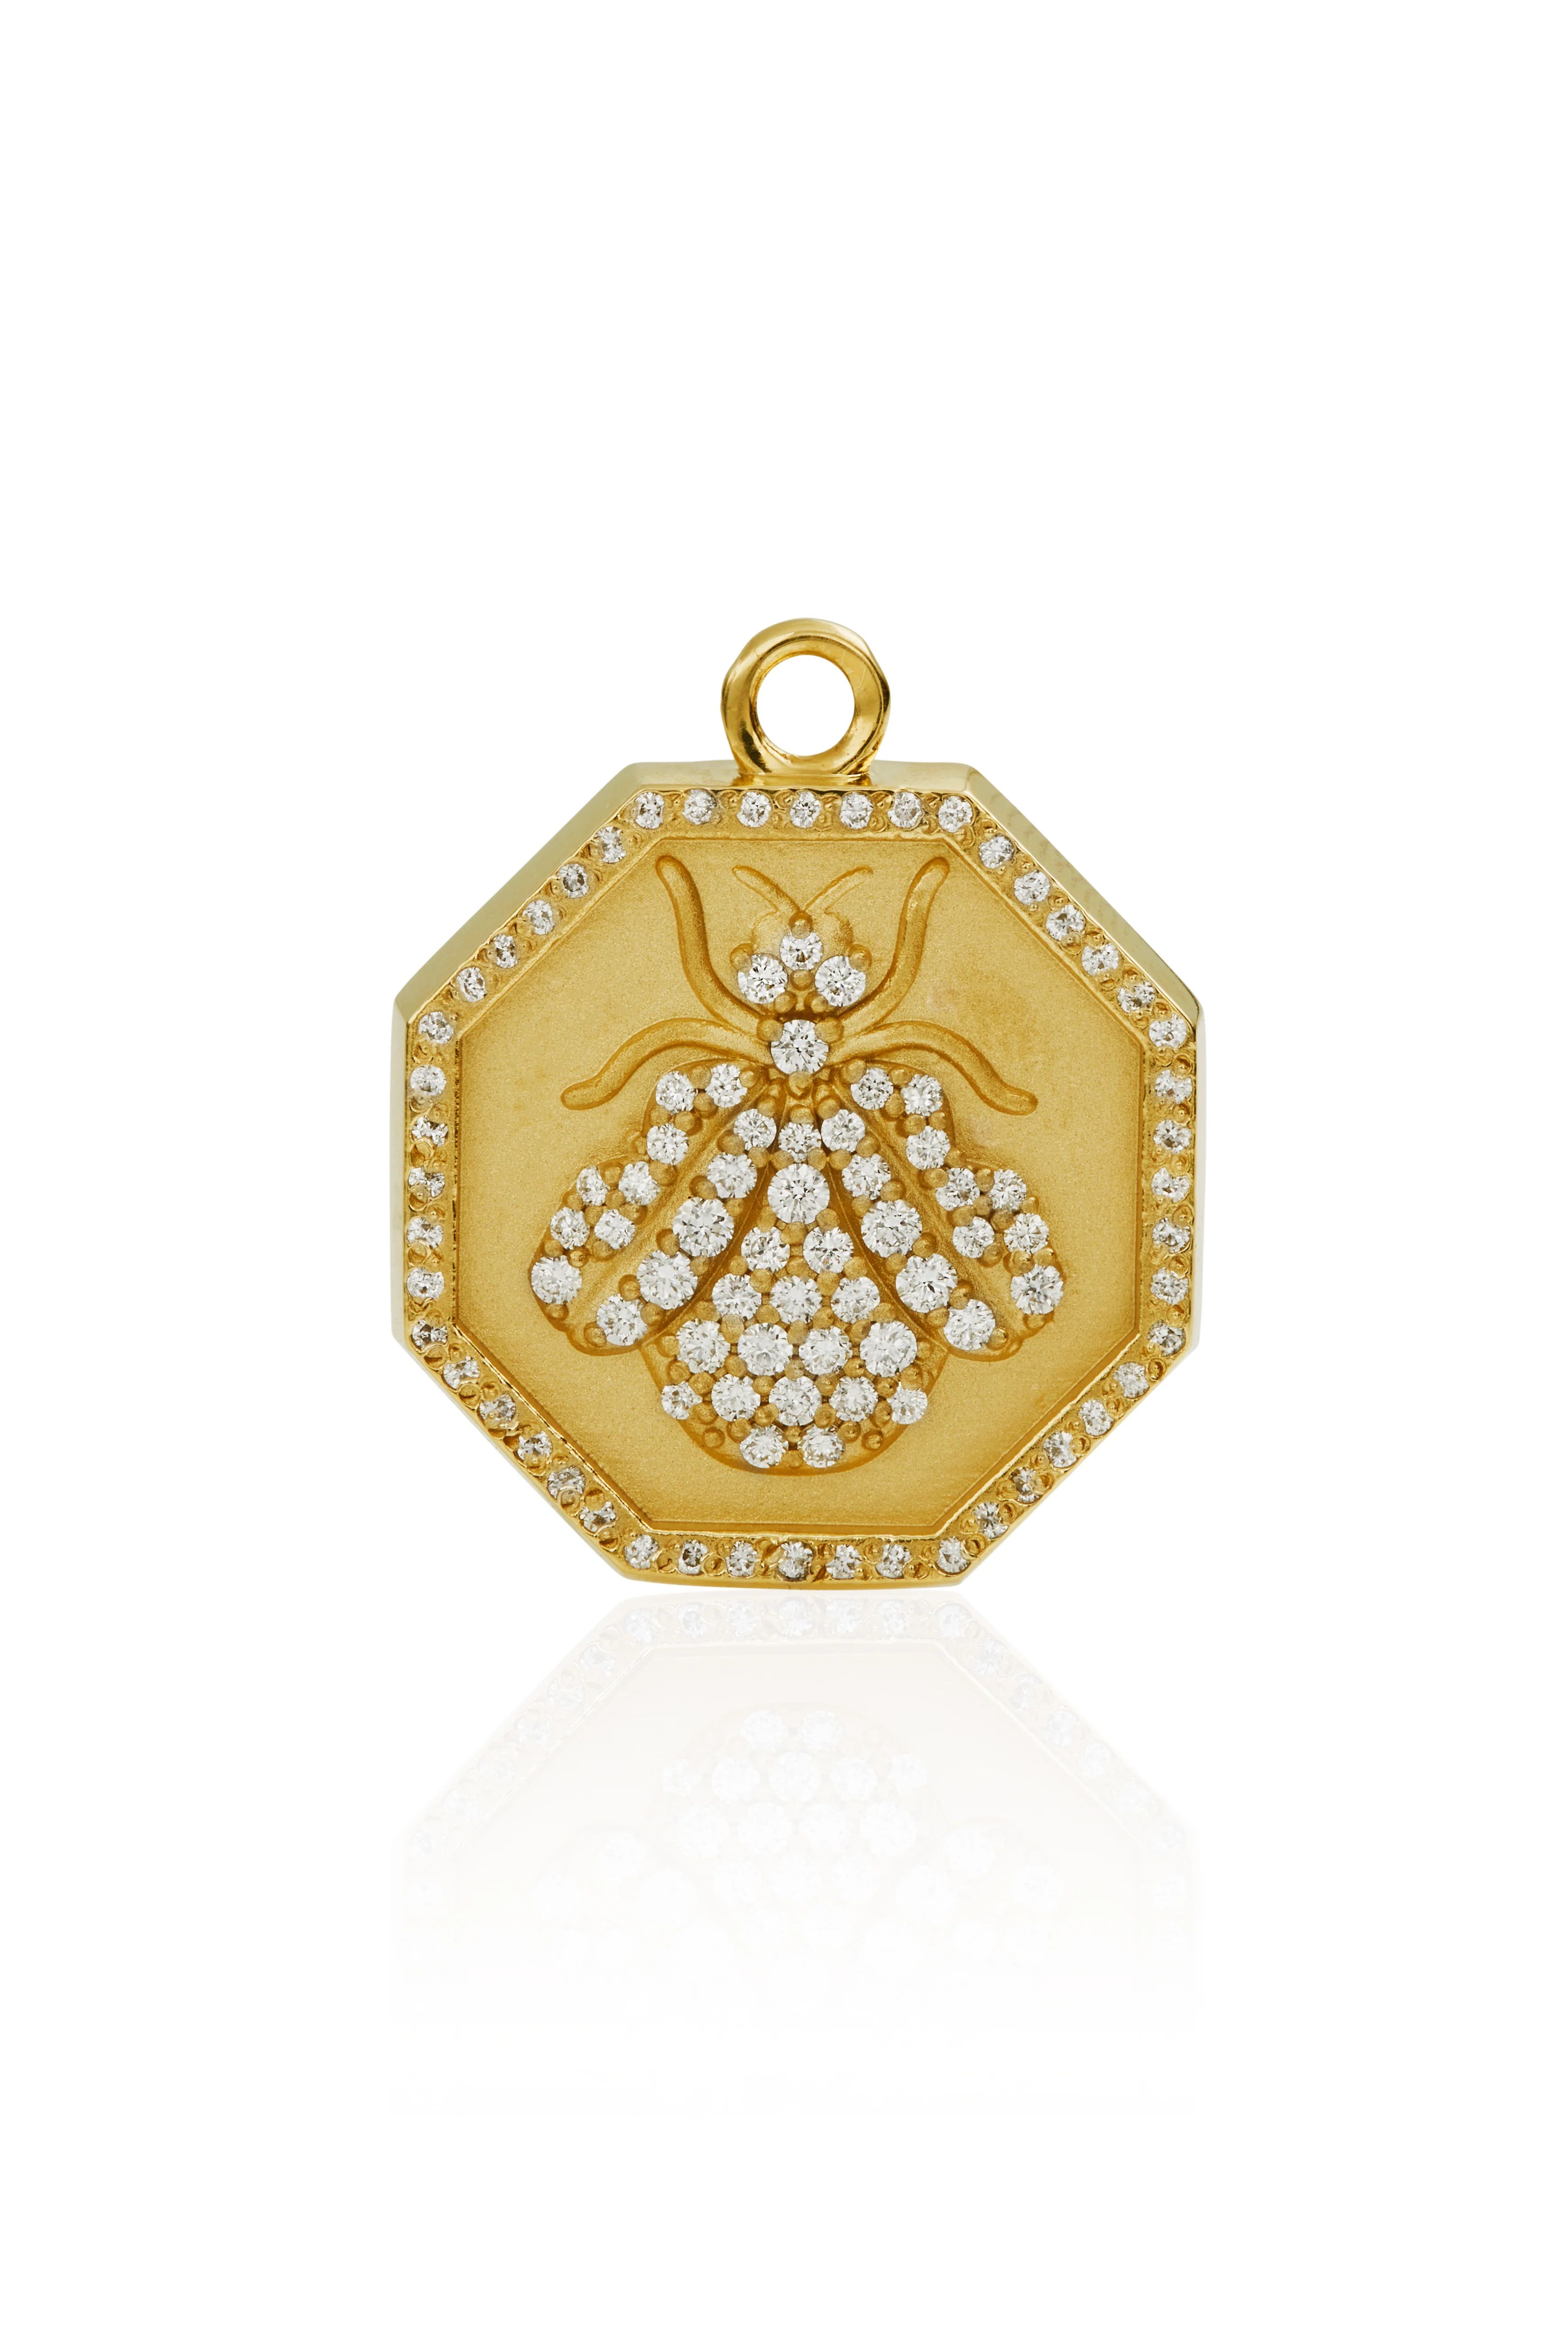 18KY Octagonal Pave Bee Charm | Susan Saffron Jewelry